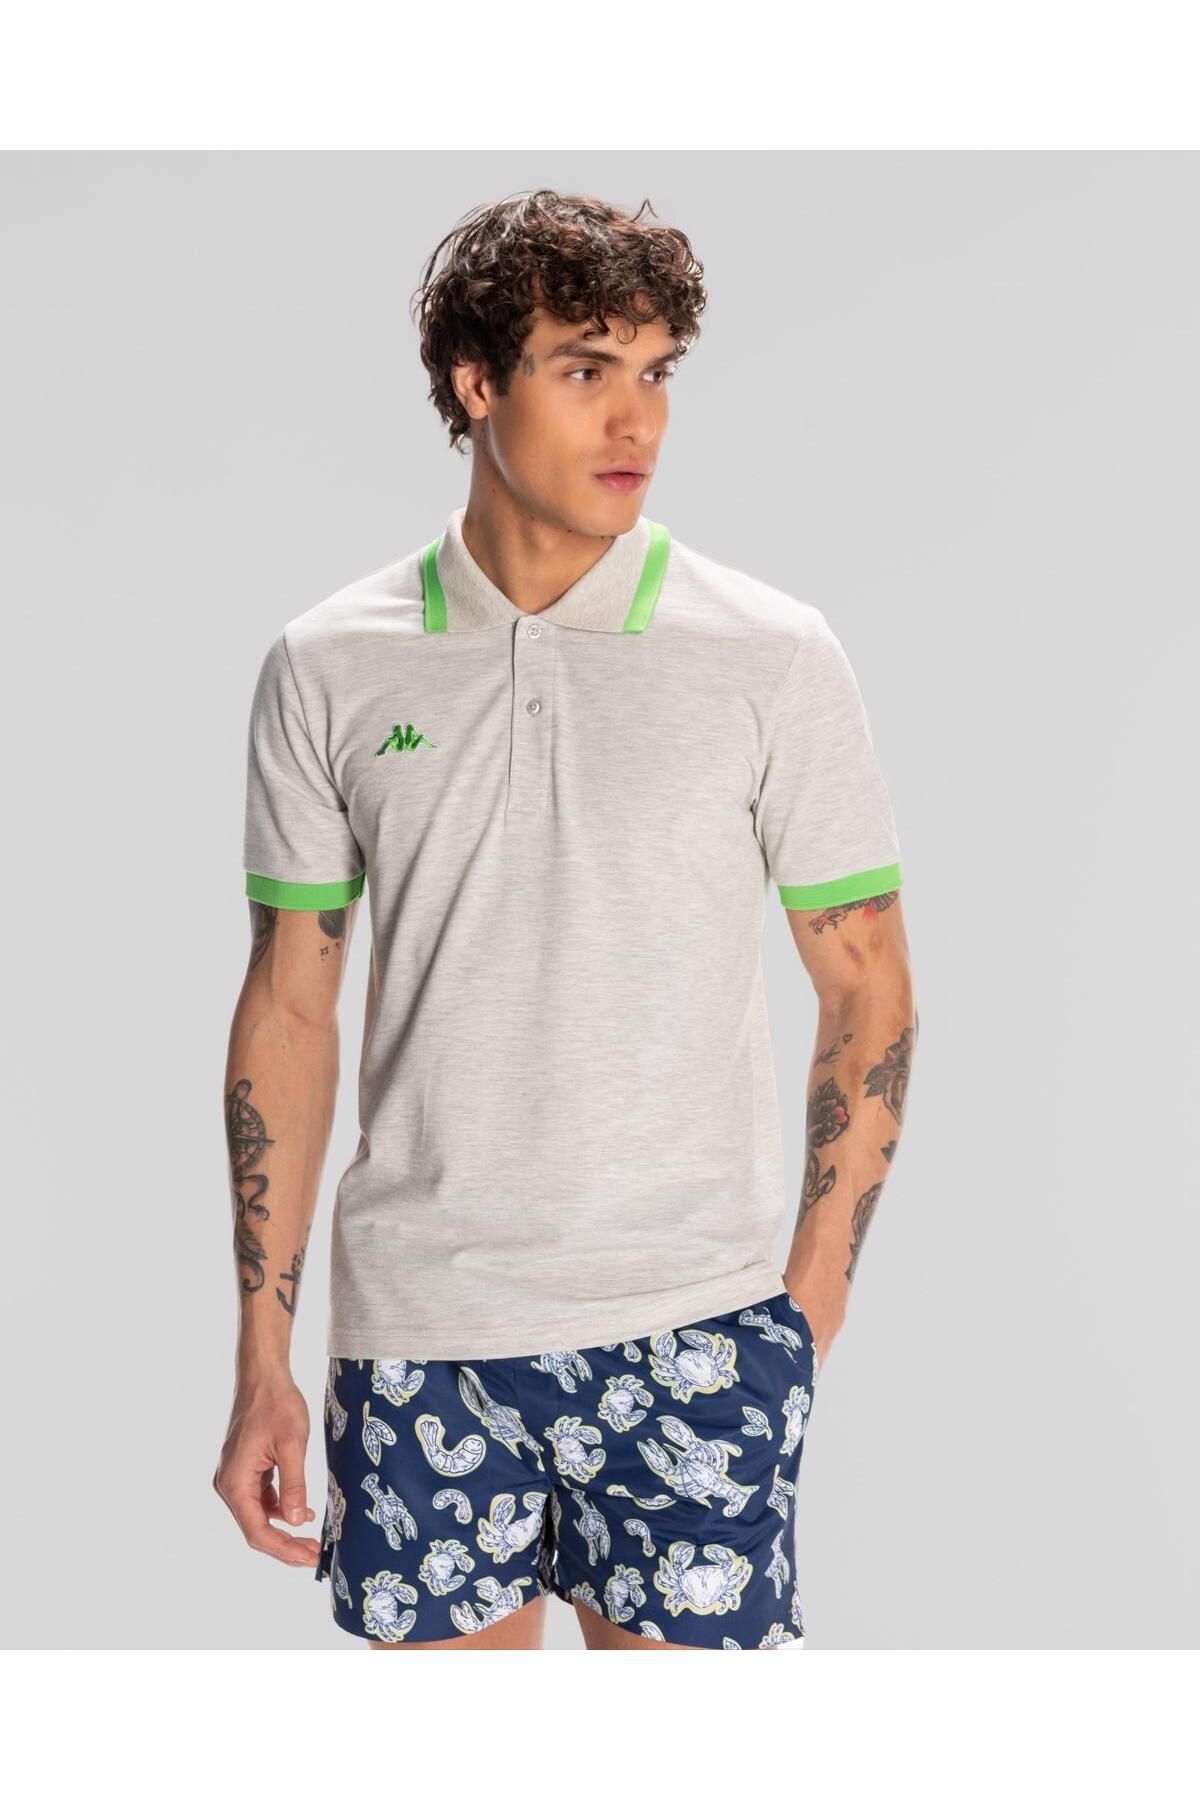 Kappa Logo Neon Erkek Gri-Yeşil Regular Fit Polo Tişört